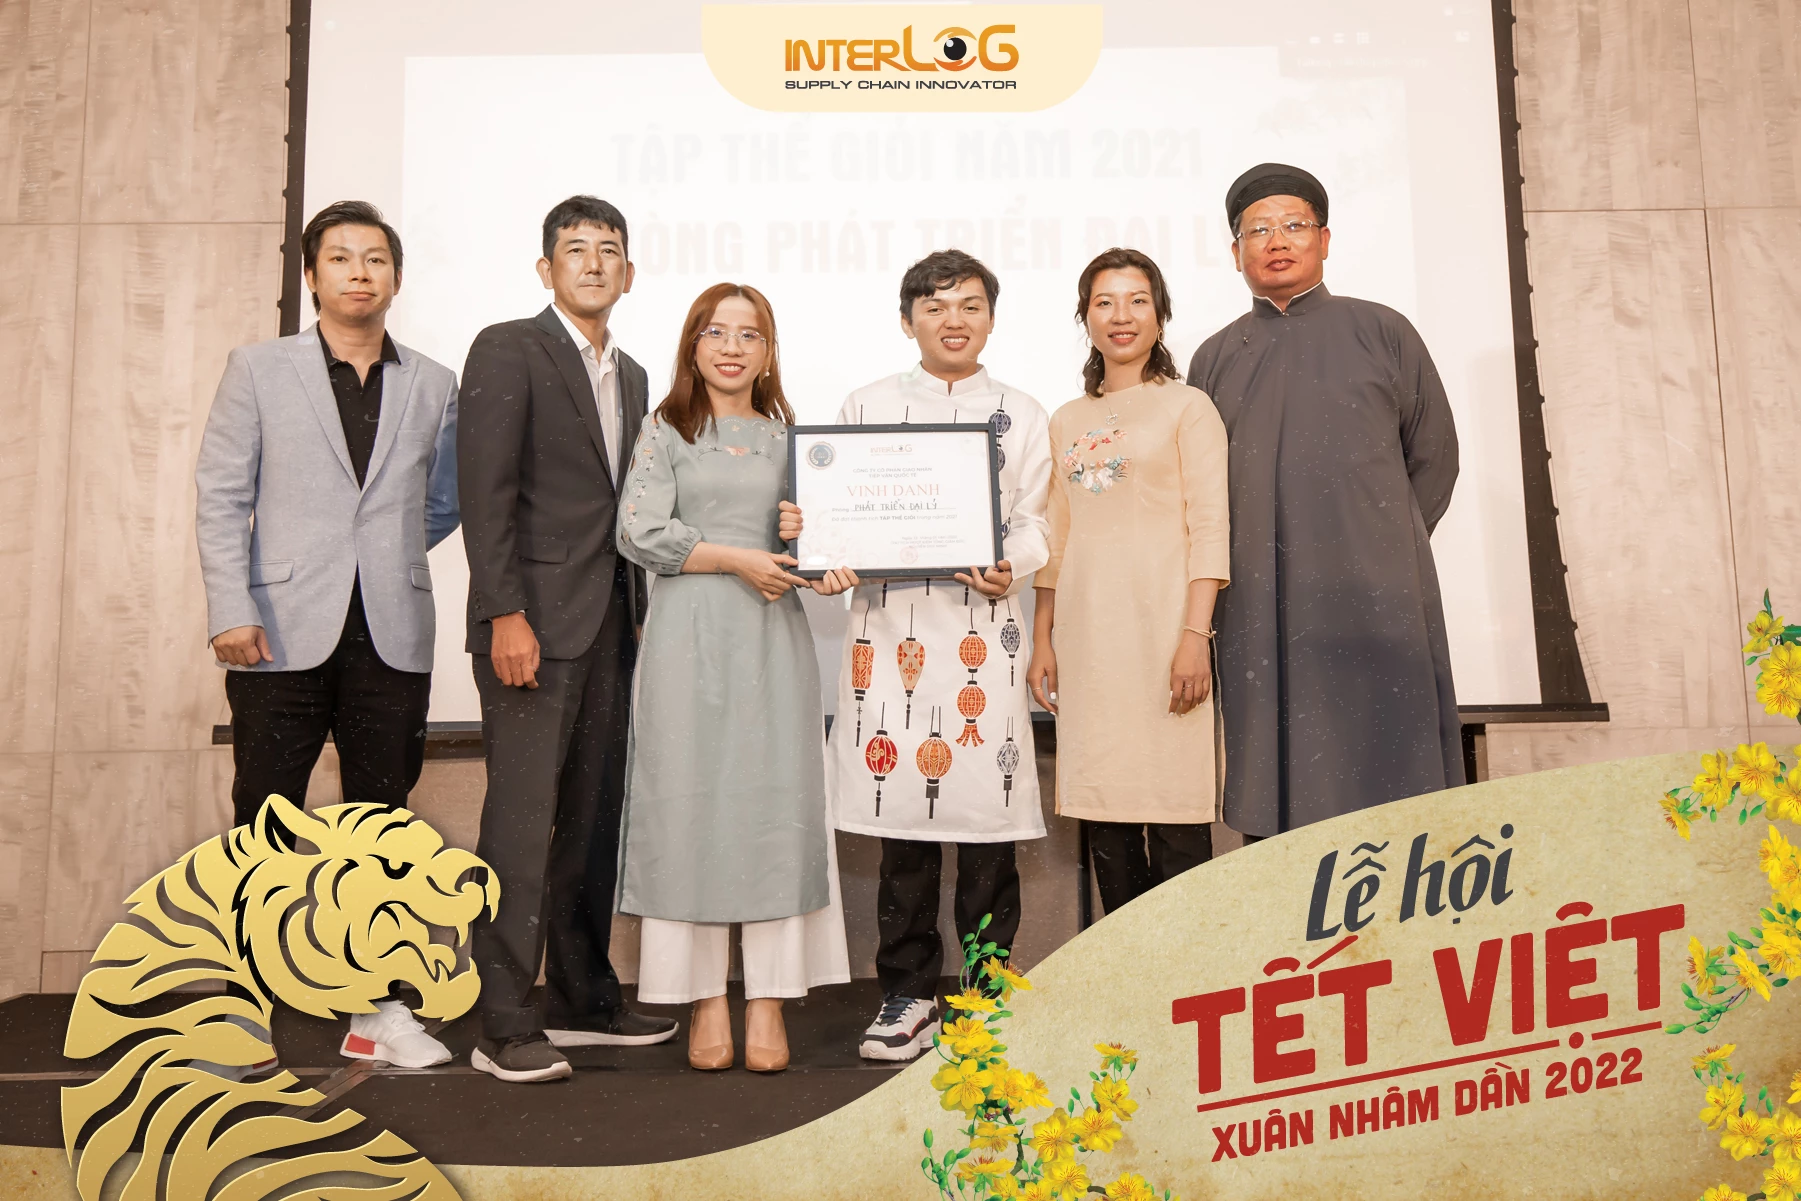 Vietnamese New Year Festival InterLOG: Celebrate the Tiger Spring Festival of 2022